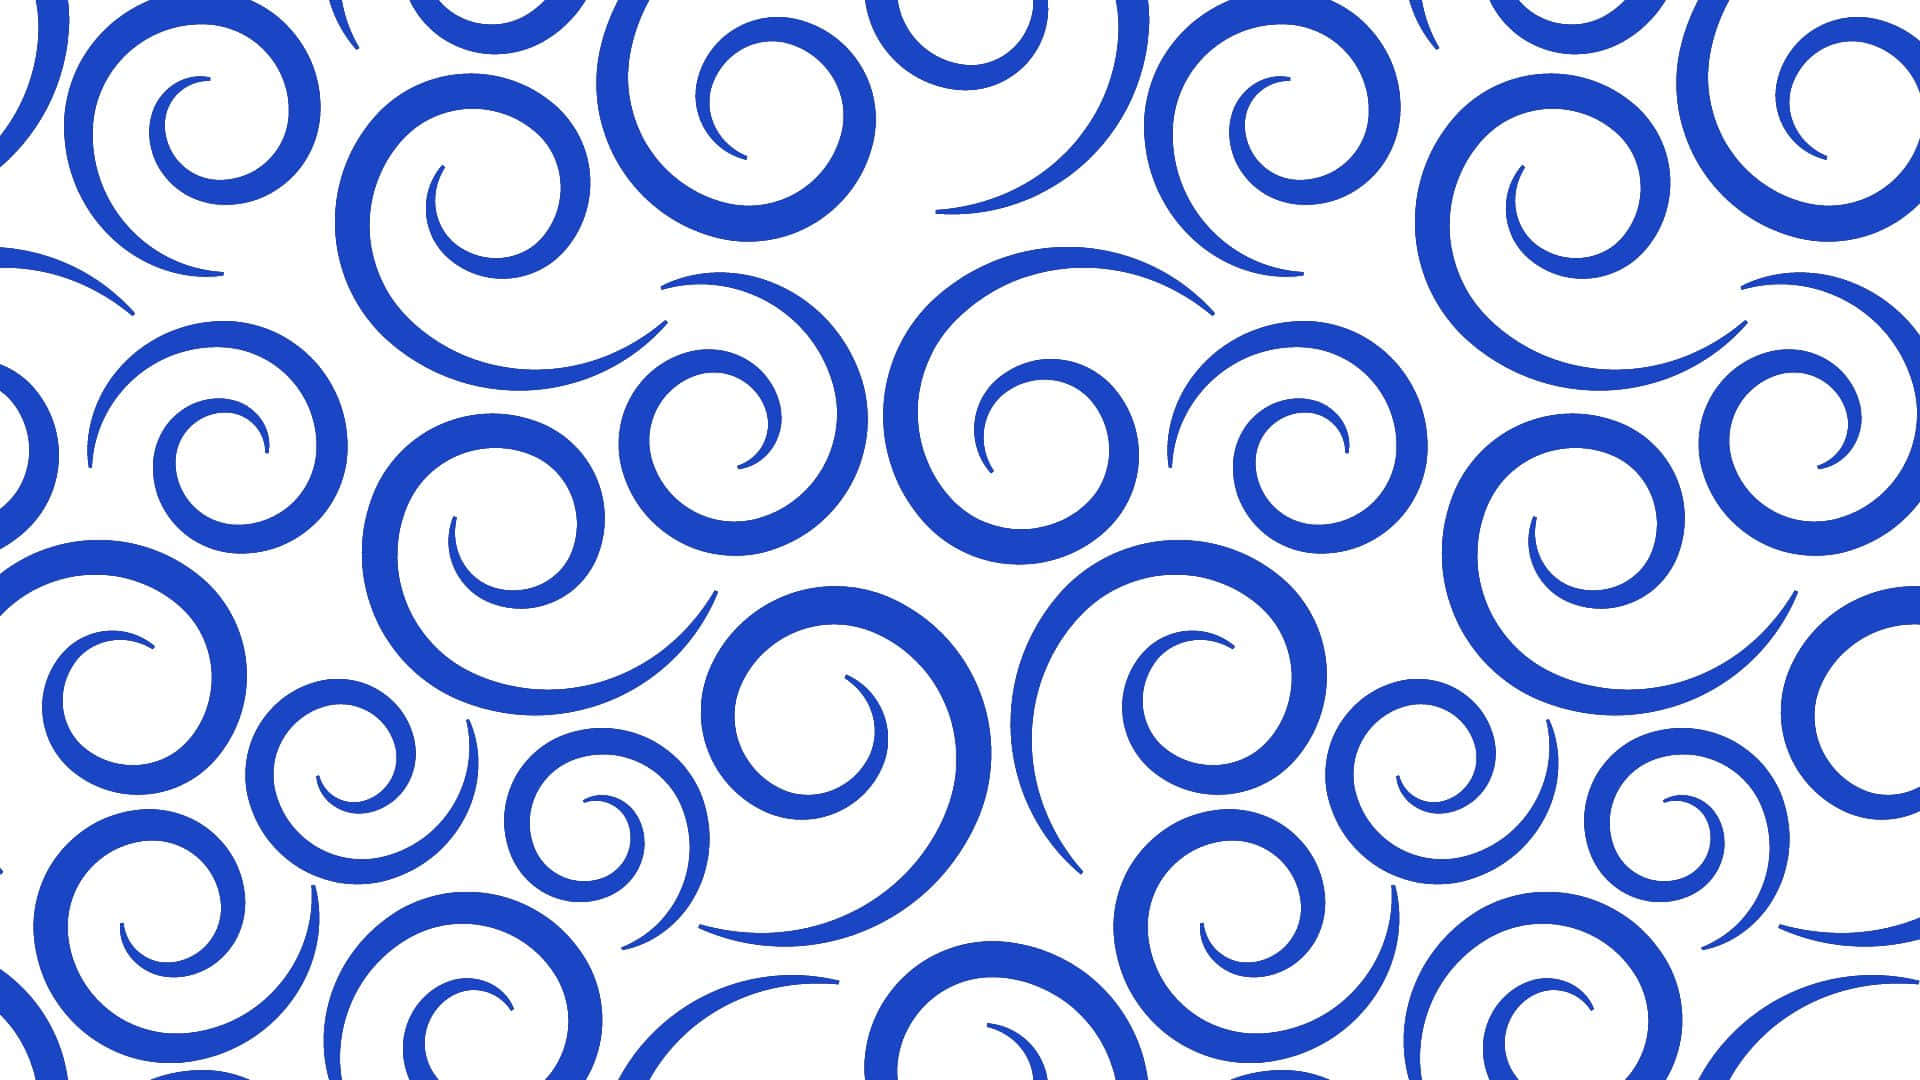 A Blue And White Swirl Pattern